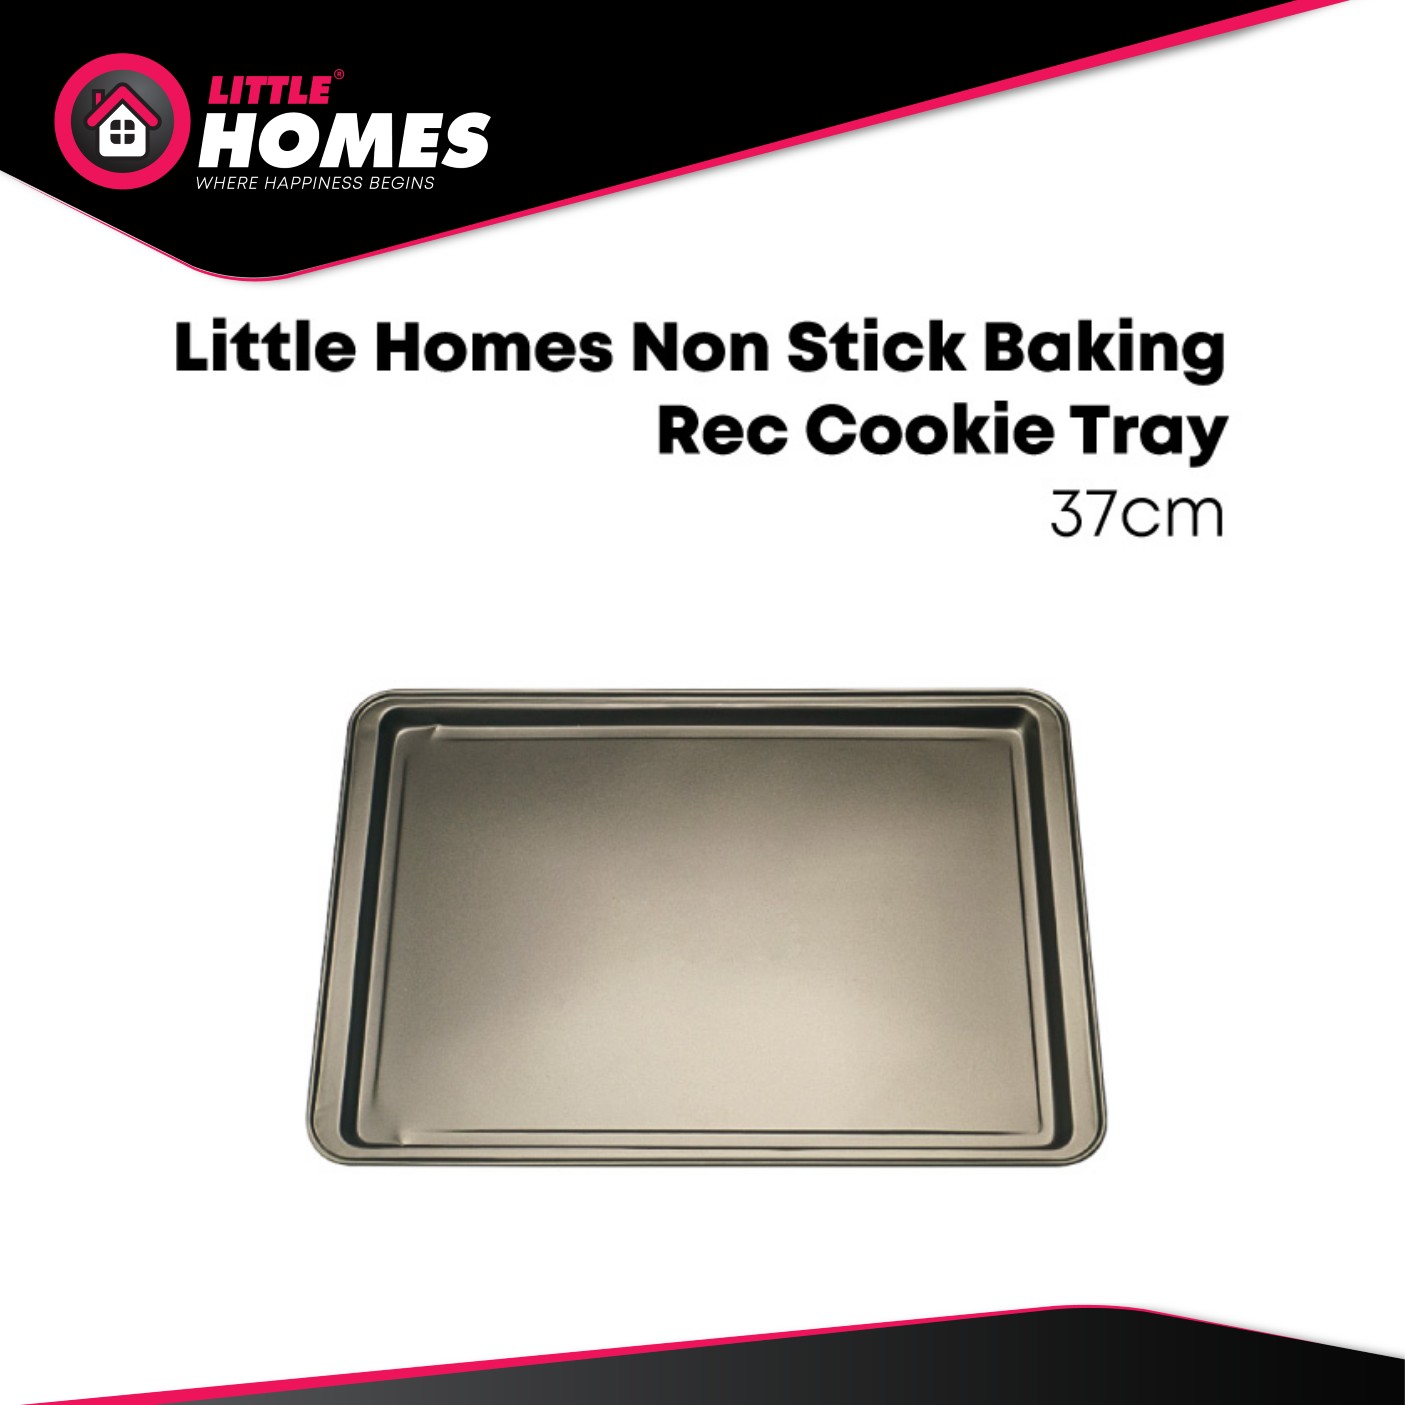 Little Homes Non Stick Baking Pan Cookies Tray 37cm Rectangular Shallow Hotplate Mold Bakeware